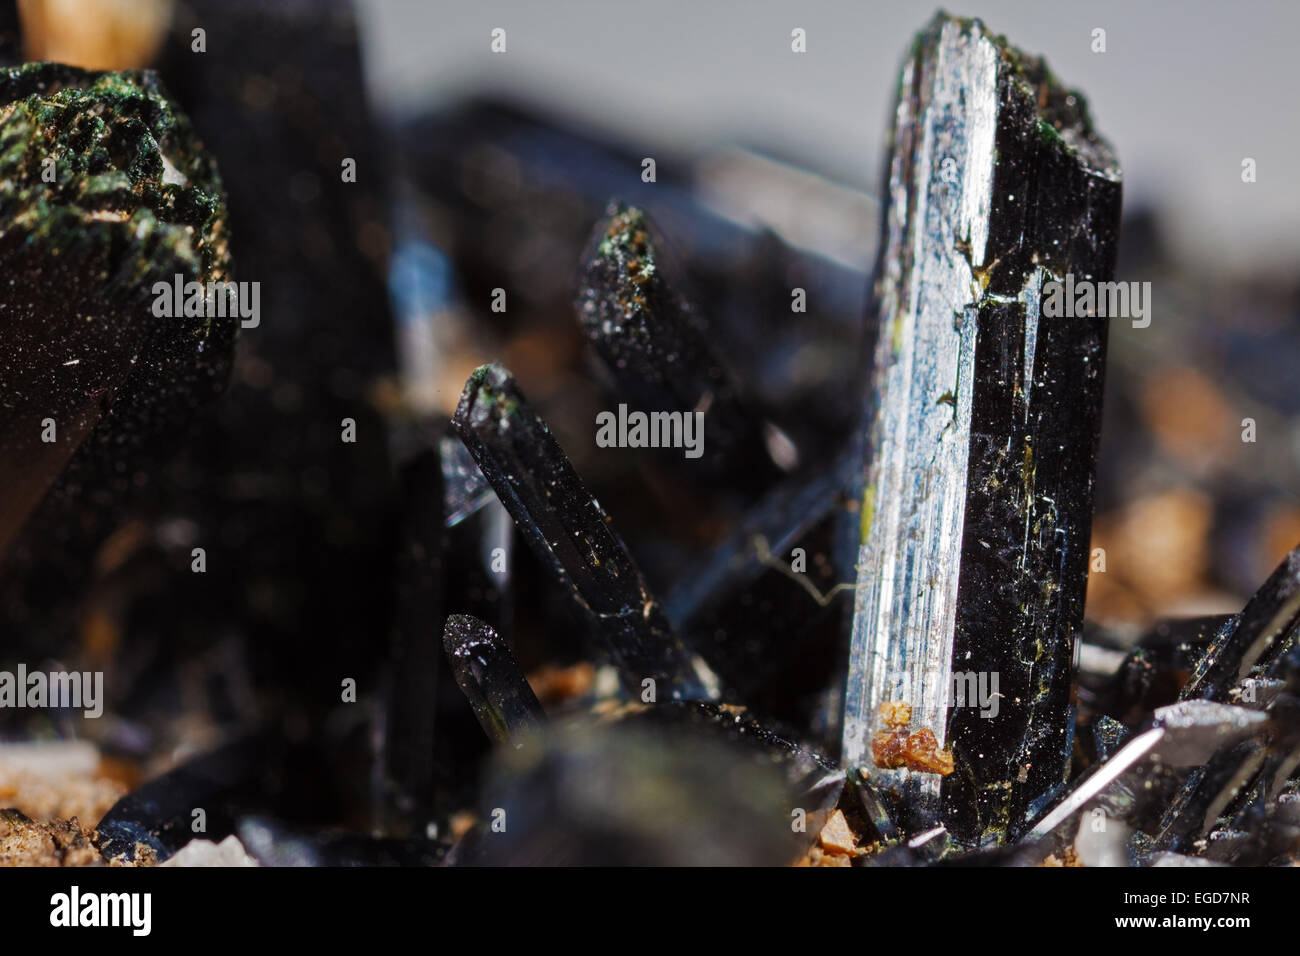 Turmalinkristalle in Makrofotografie Stockfoto